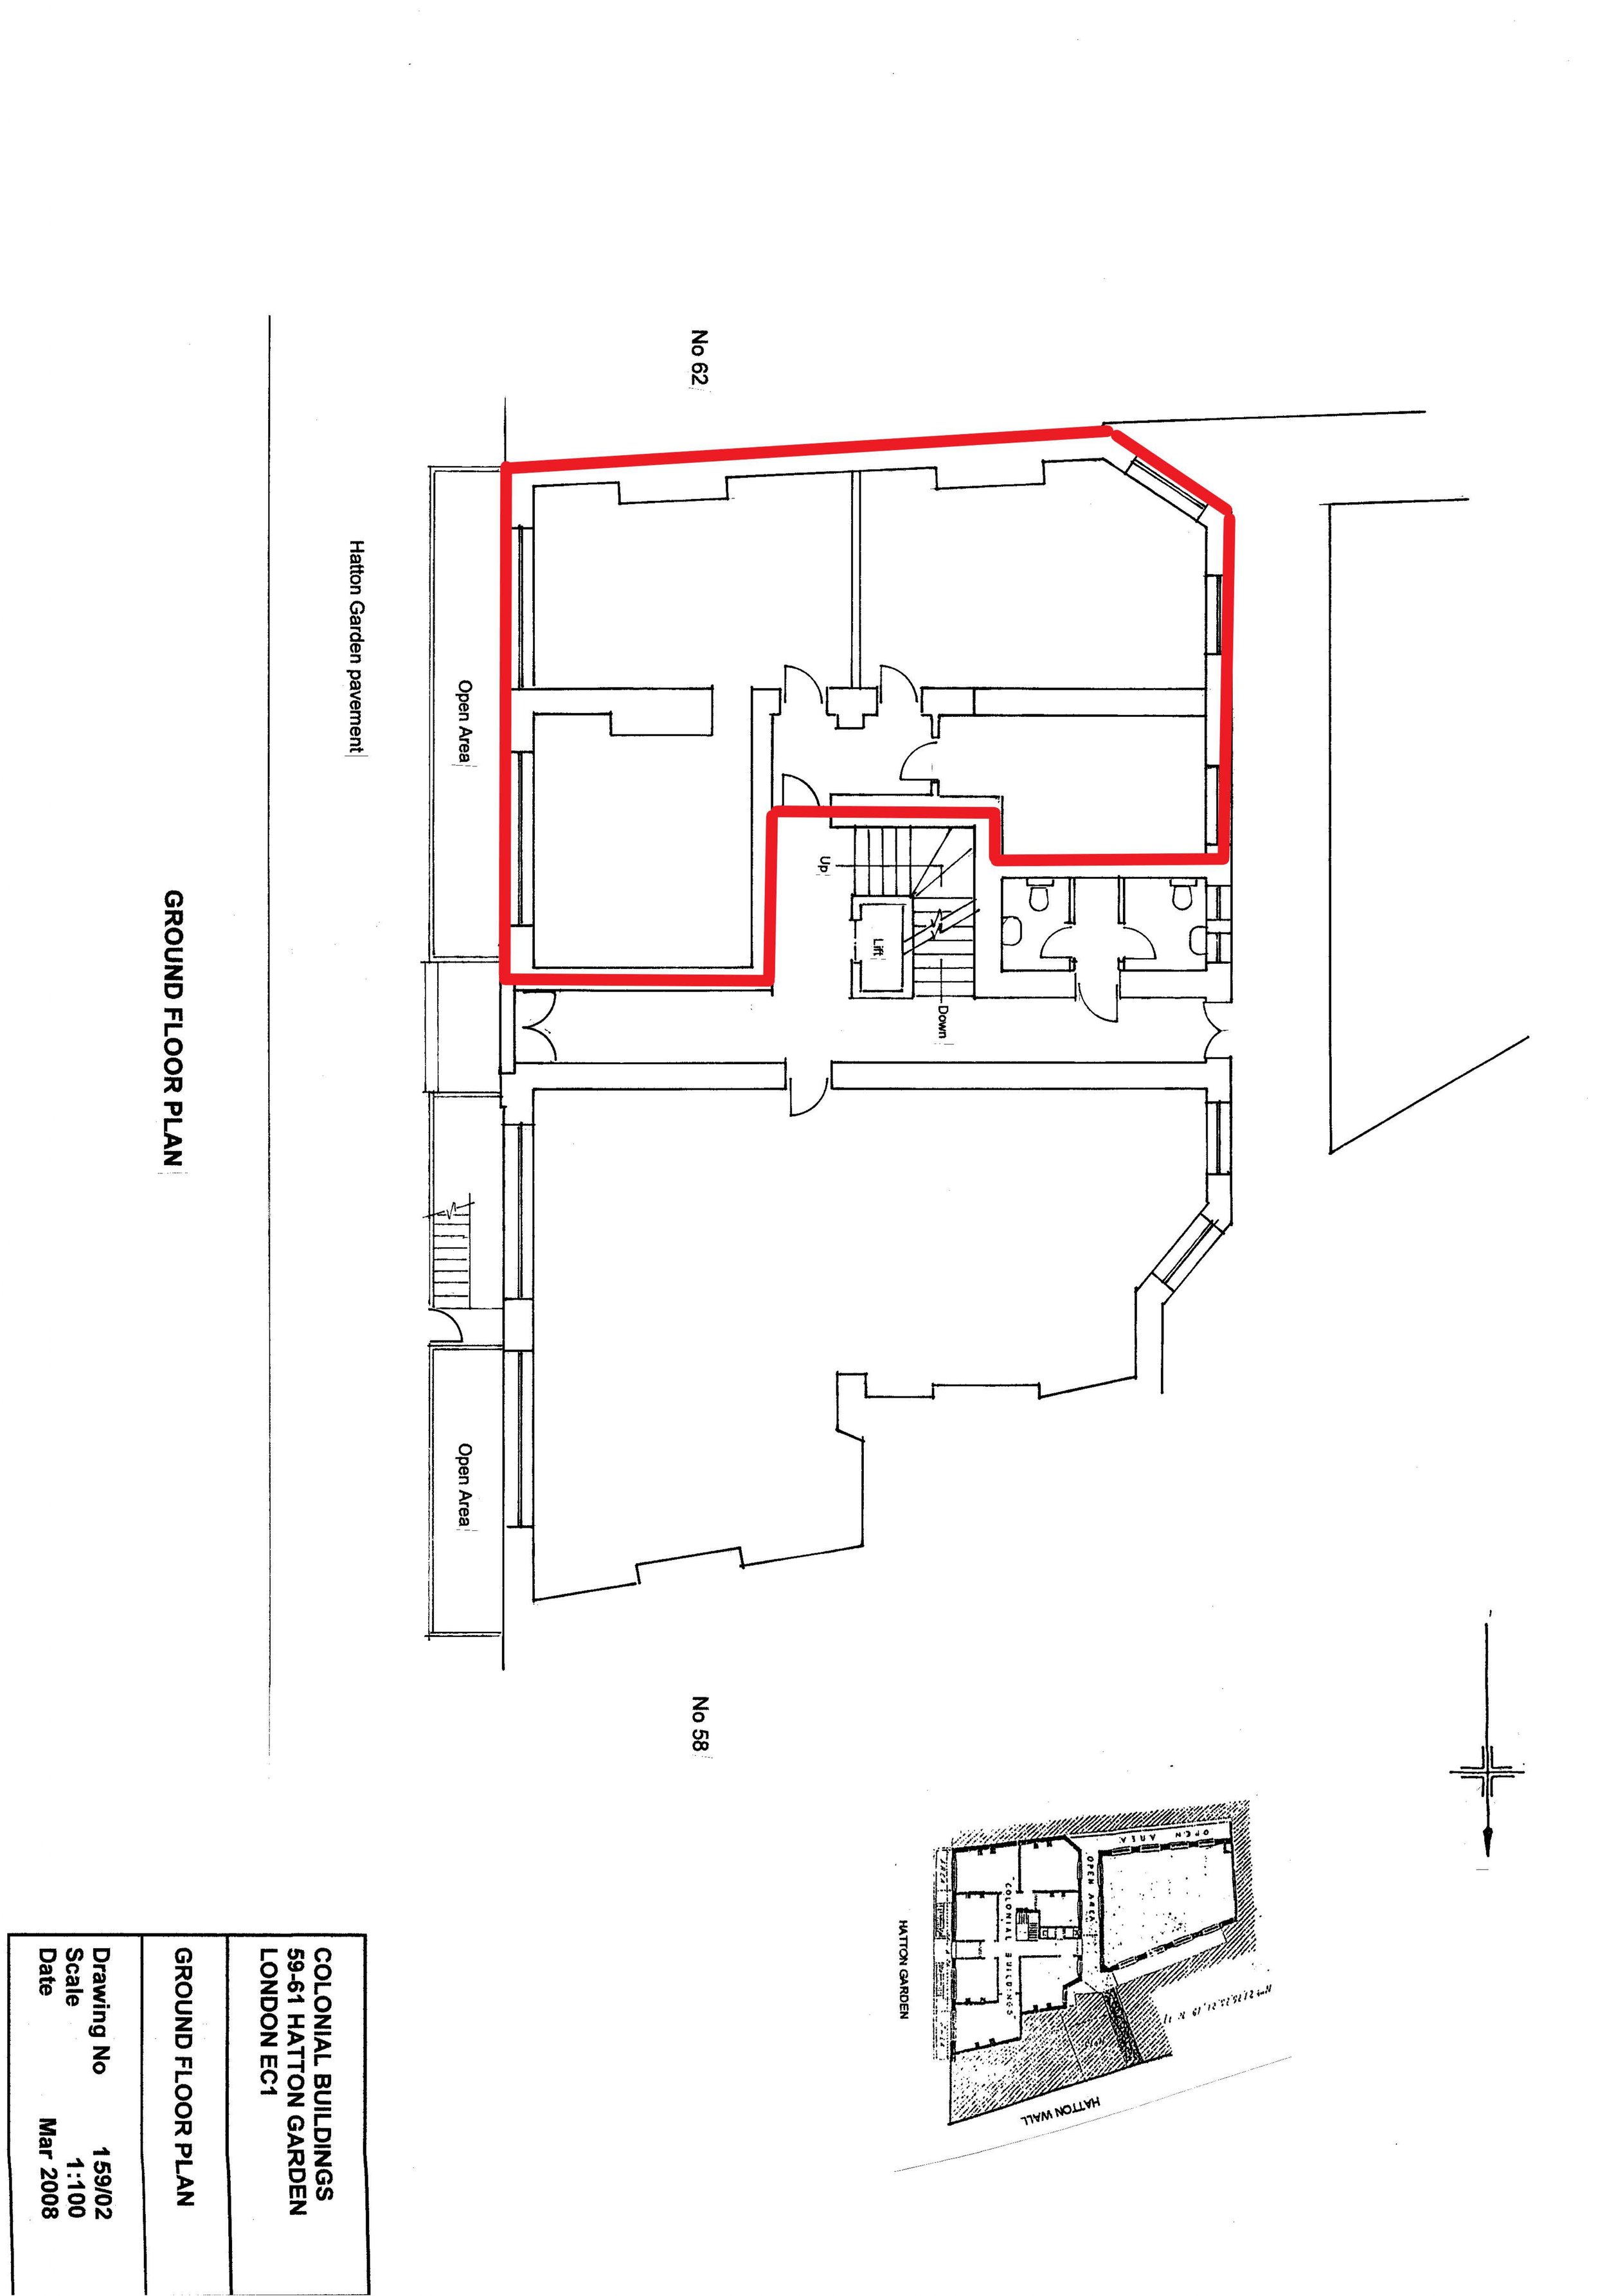 Lease Plan - Highrise Markekting Ltd - Colonial Buildings, GF Unit A - 17-Feb-23_page-0001.jpg